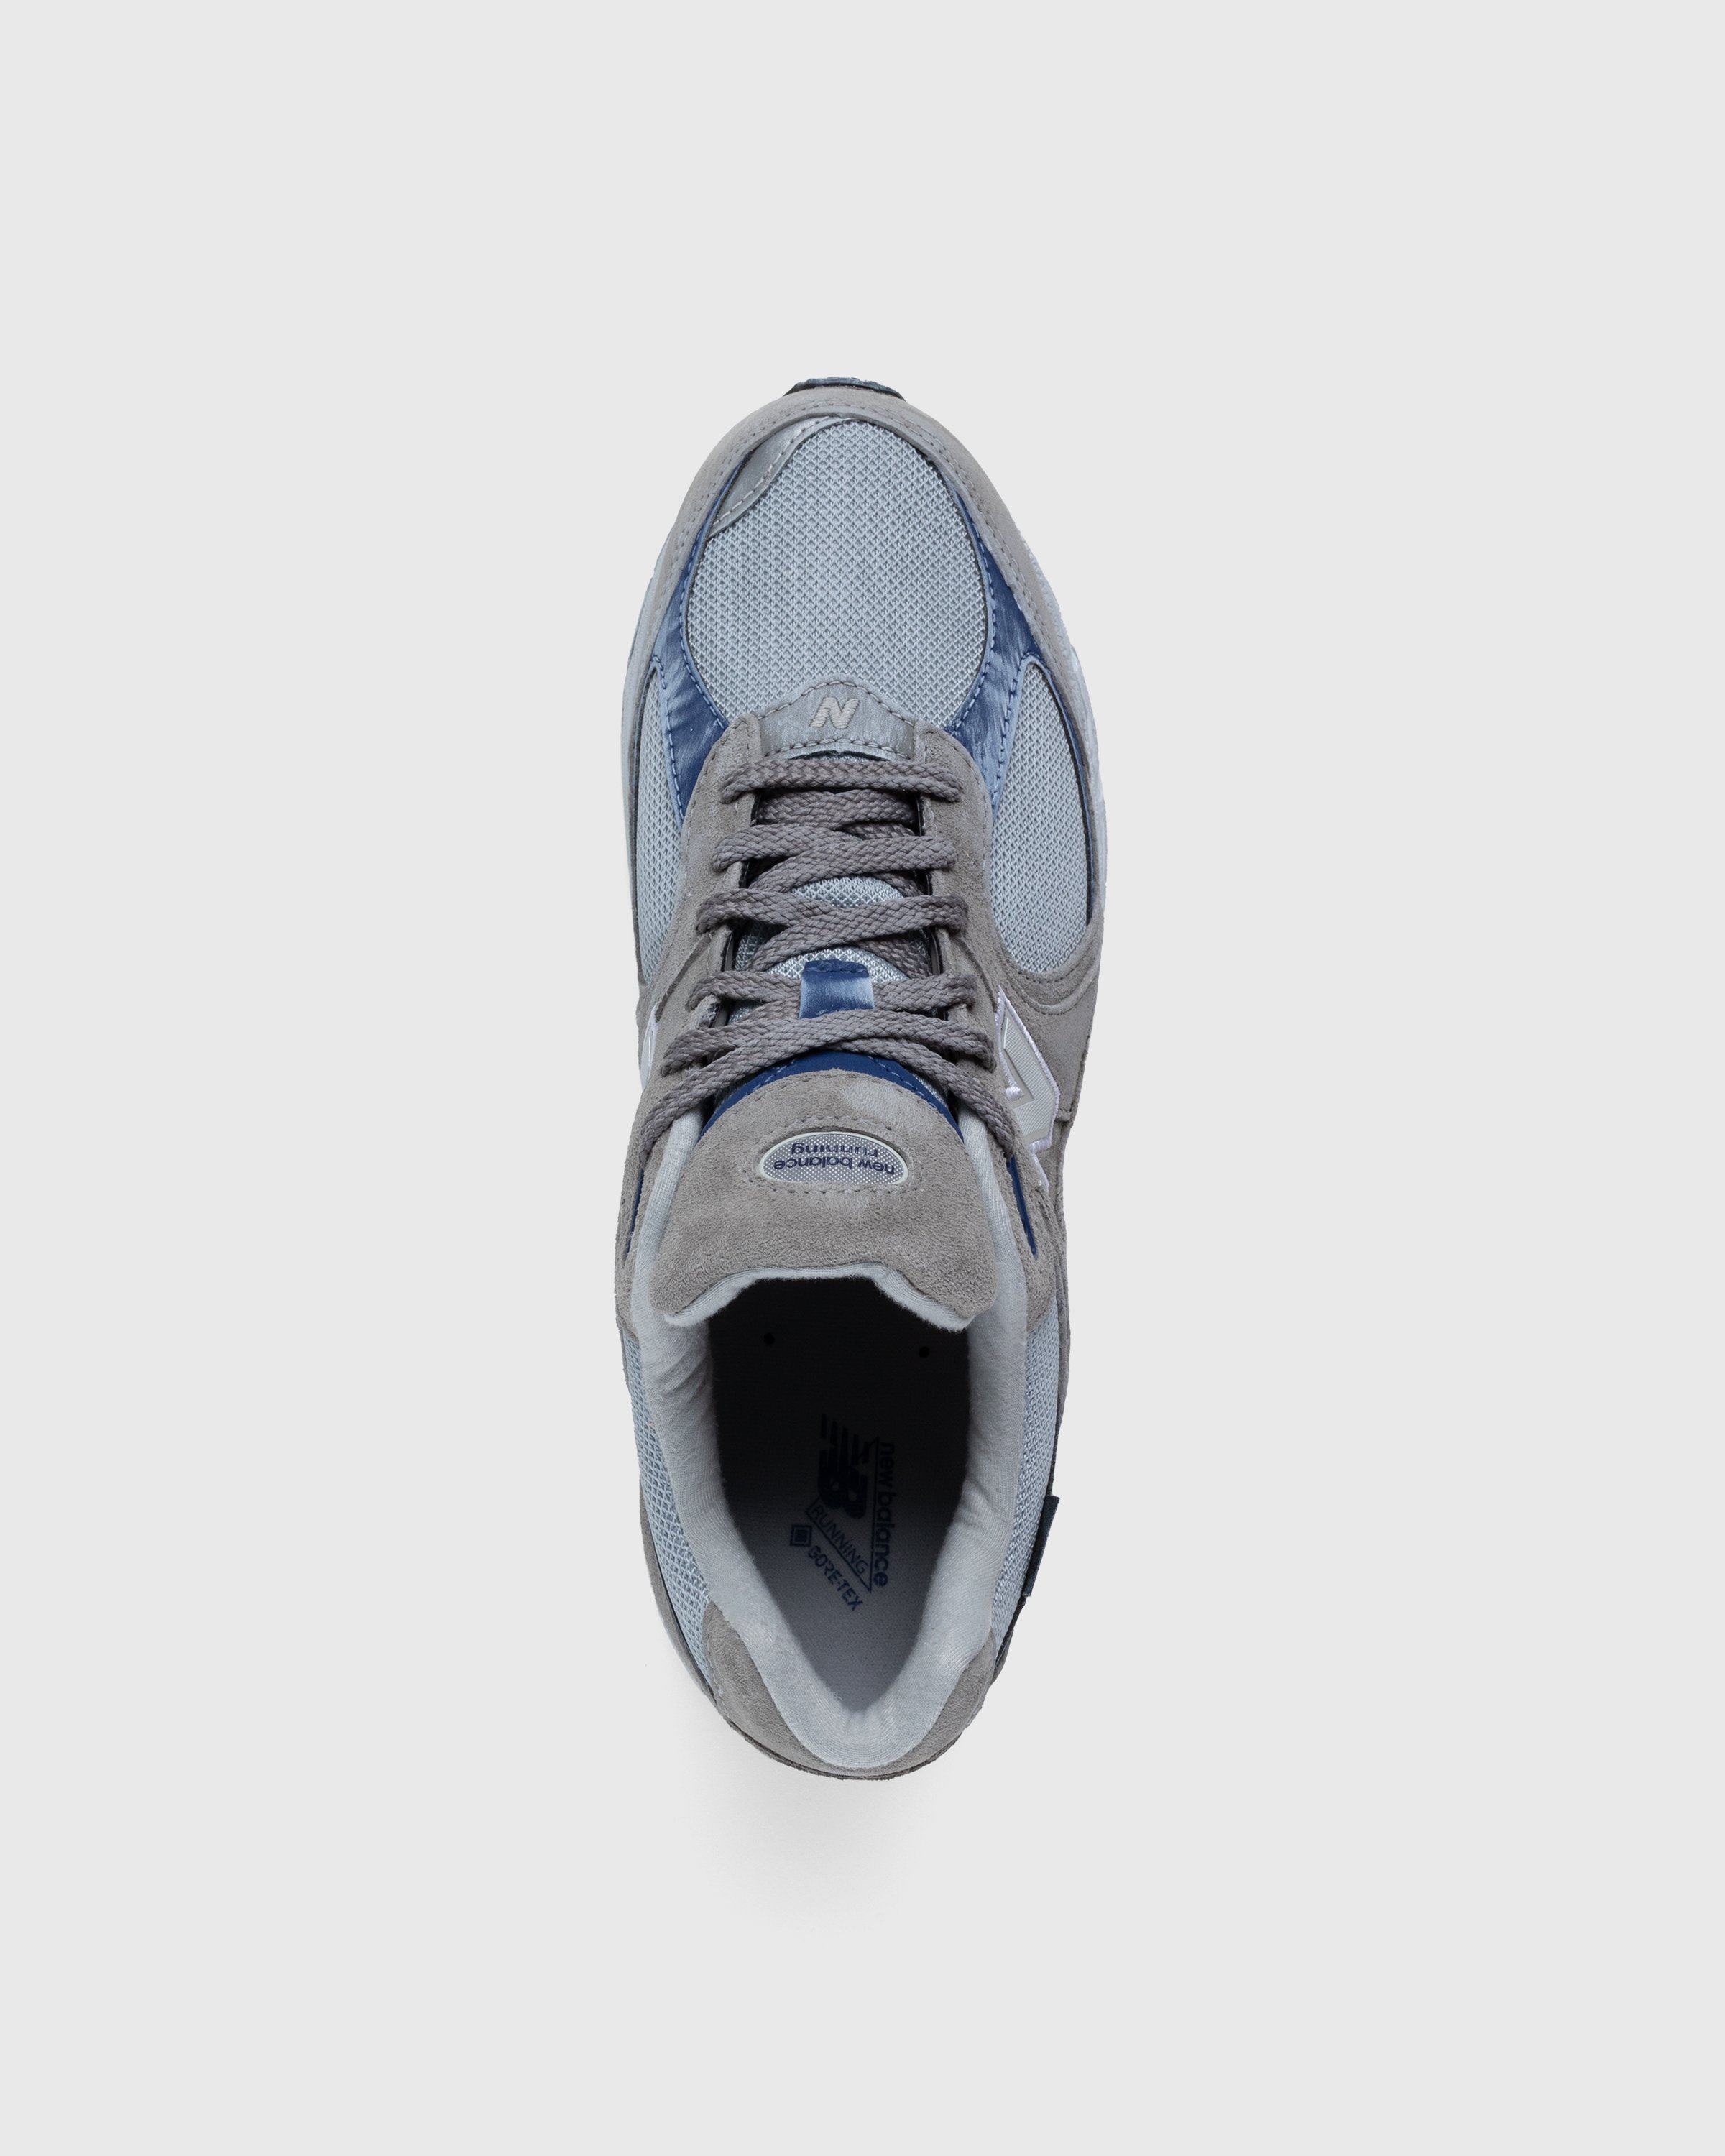 New Balance - M2002RXB Marblehead - Footwear - Grey - Image 5